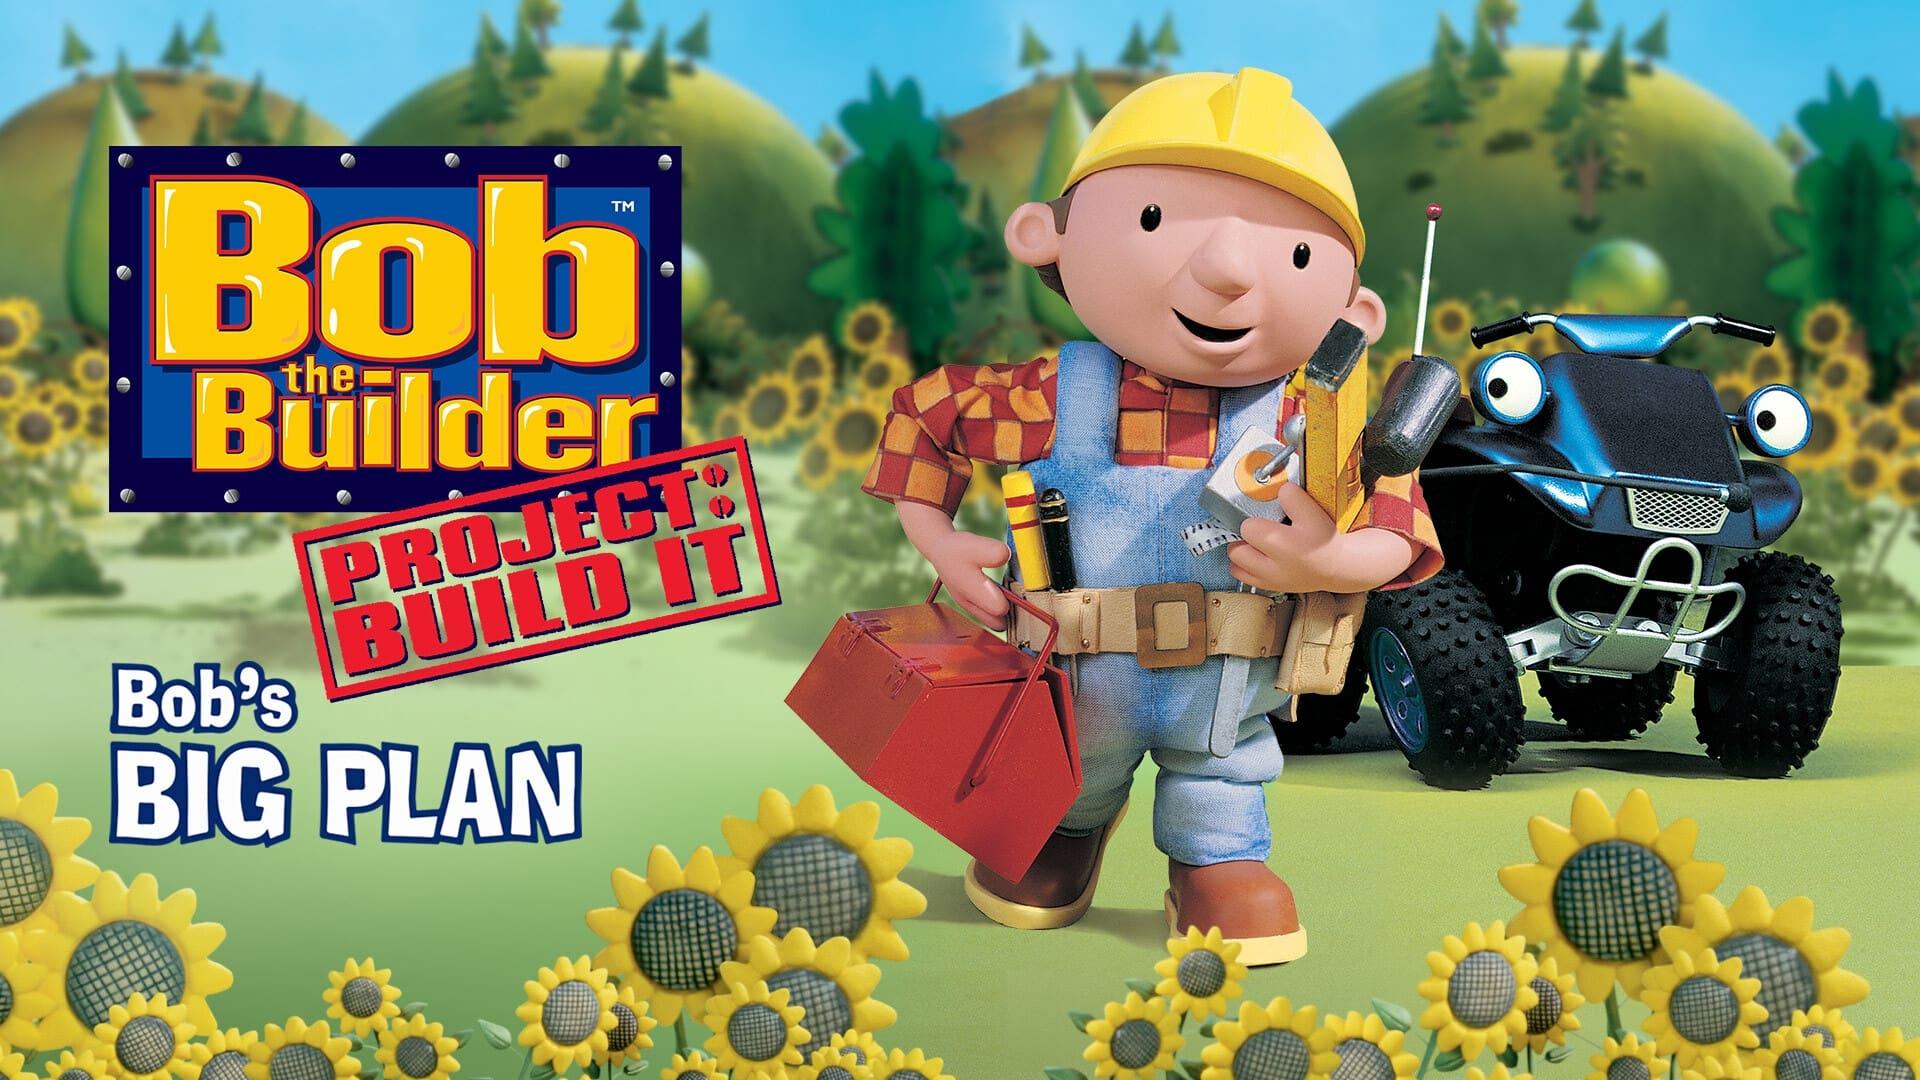 Bob the Builder: Bob's Big Plan backdrop